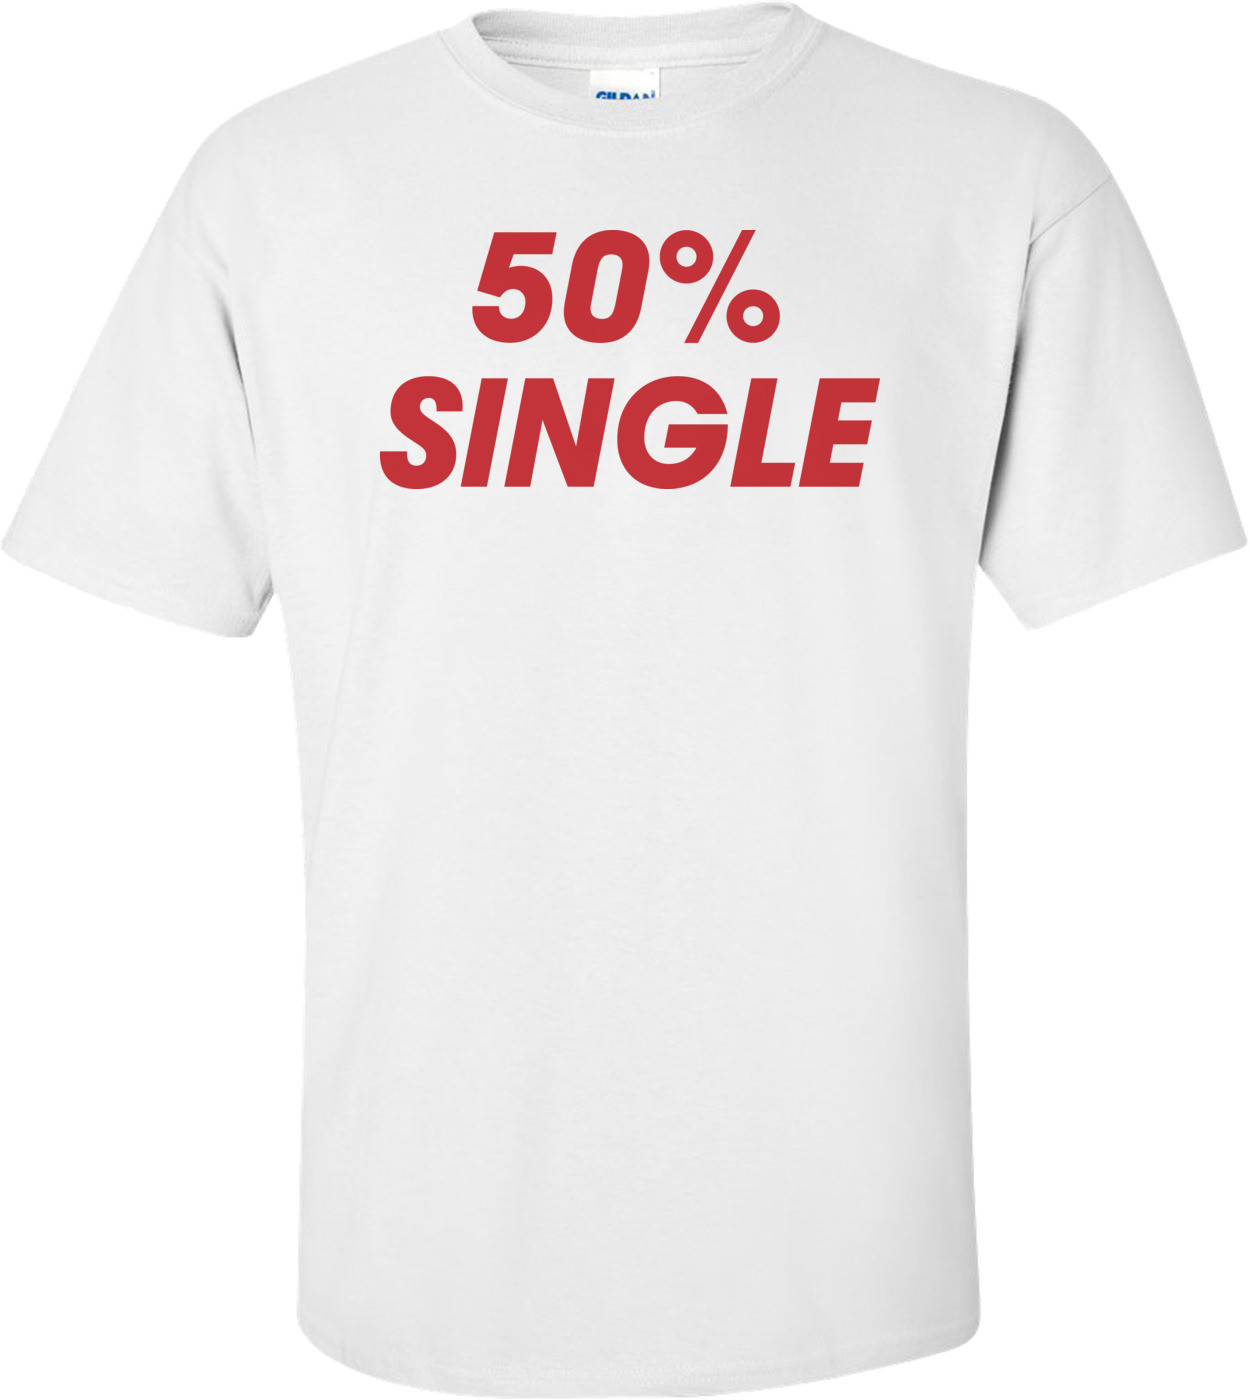 50% Single T-shirt